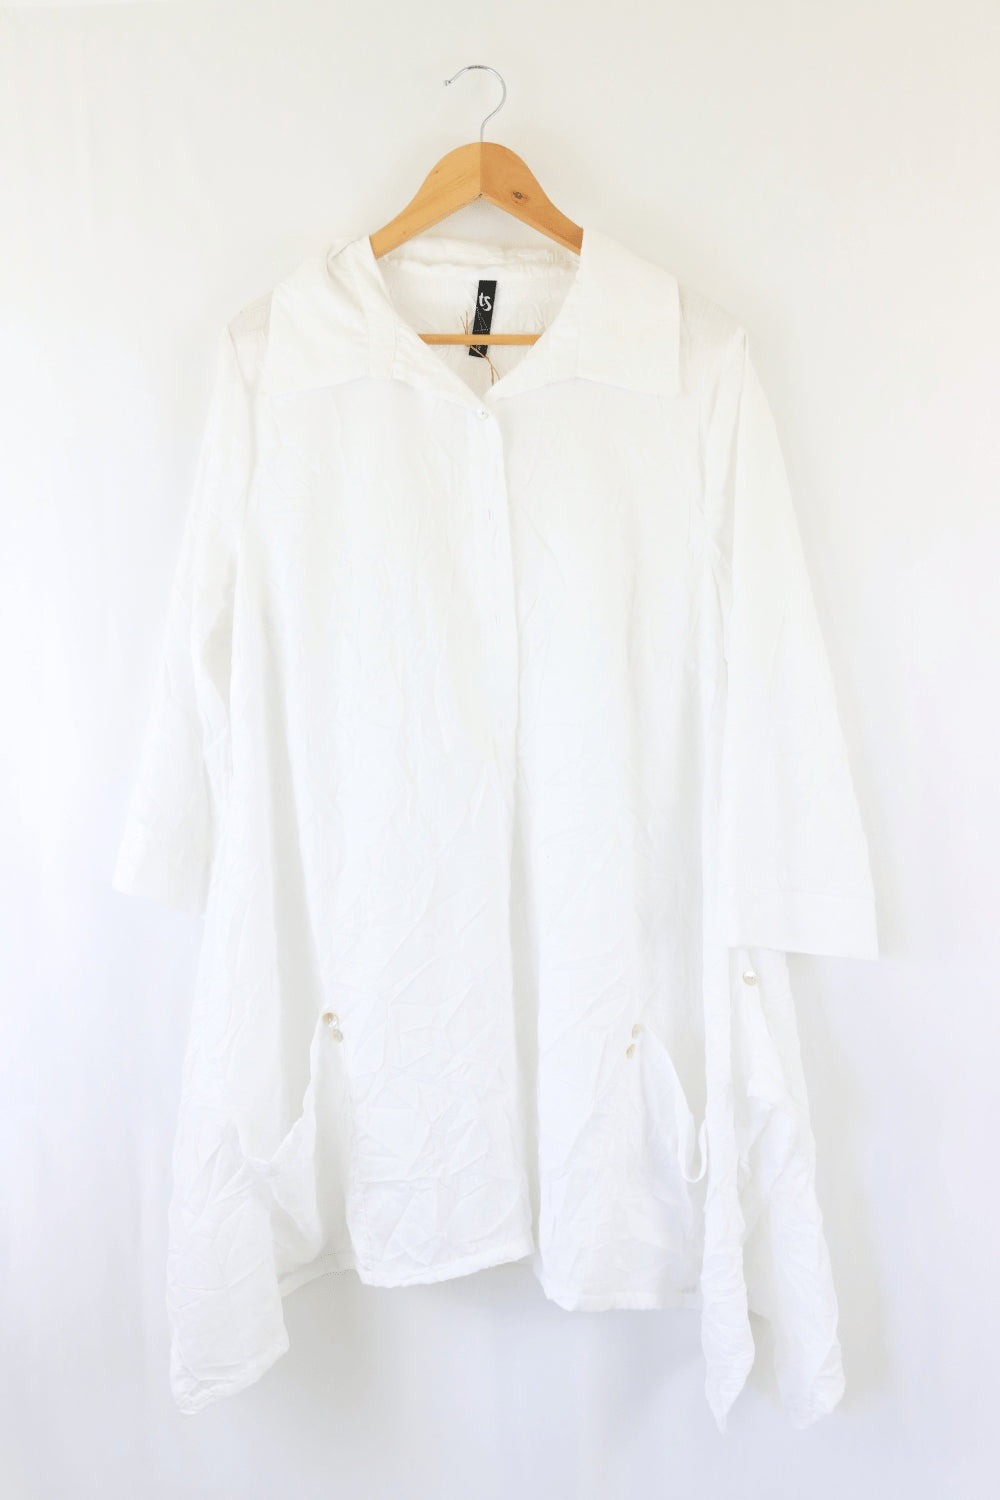 Taking Shape TS White Long Sleeve Dress 18